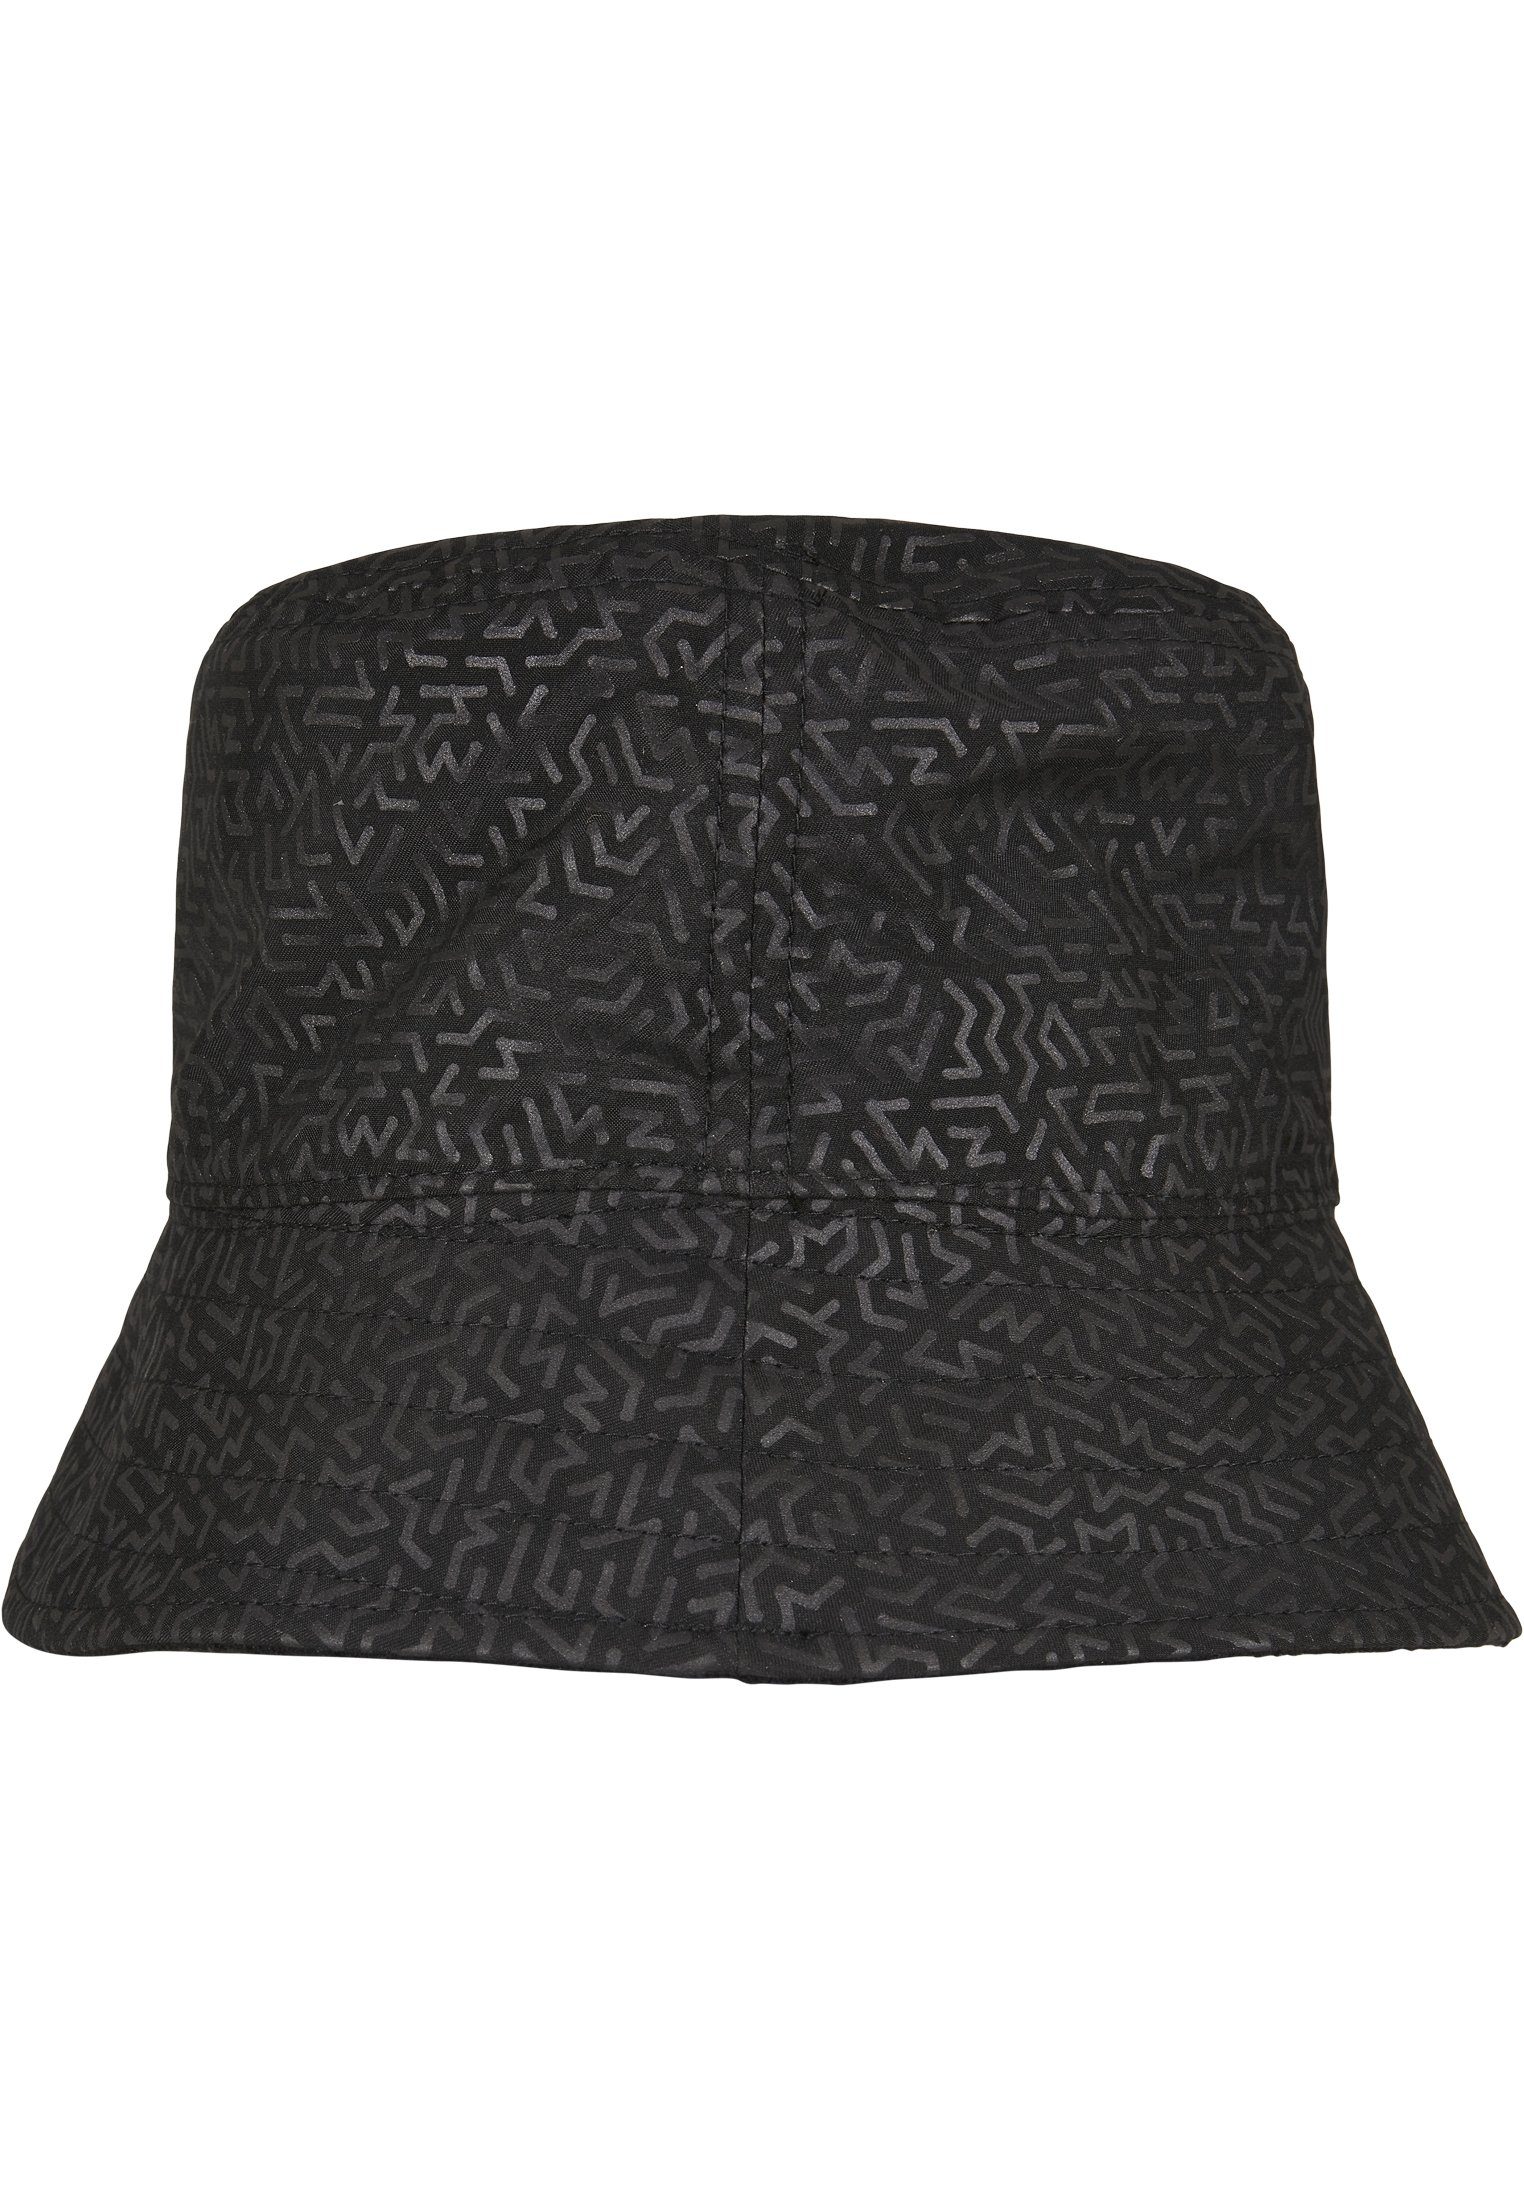 Bucket Accessoires Master Cap SONS Maze Hat Flex Warm Reversible CAYLER WL &